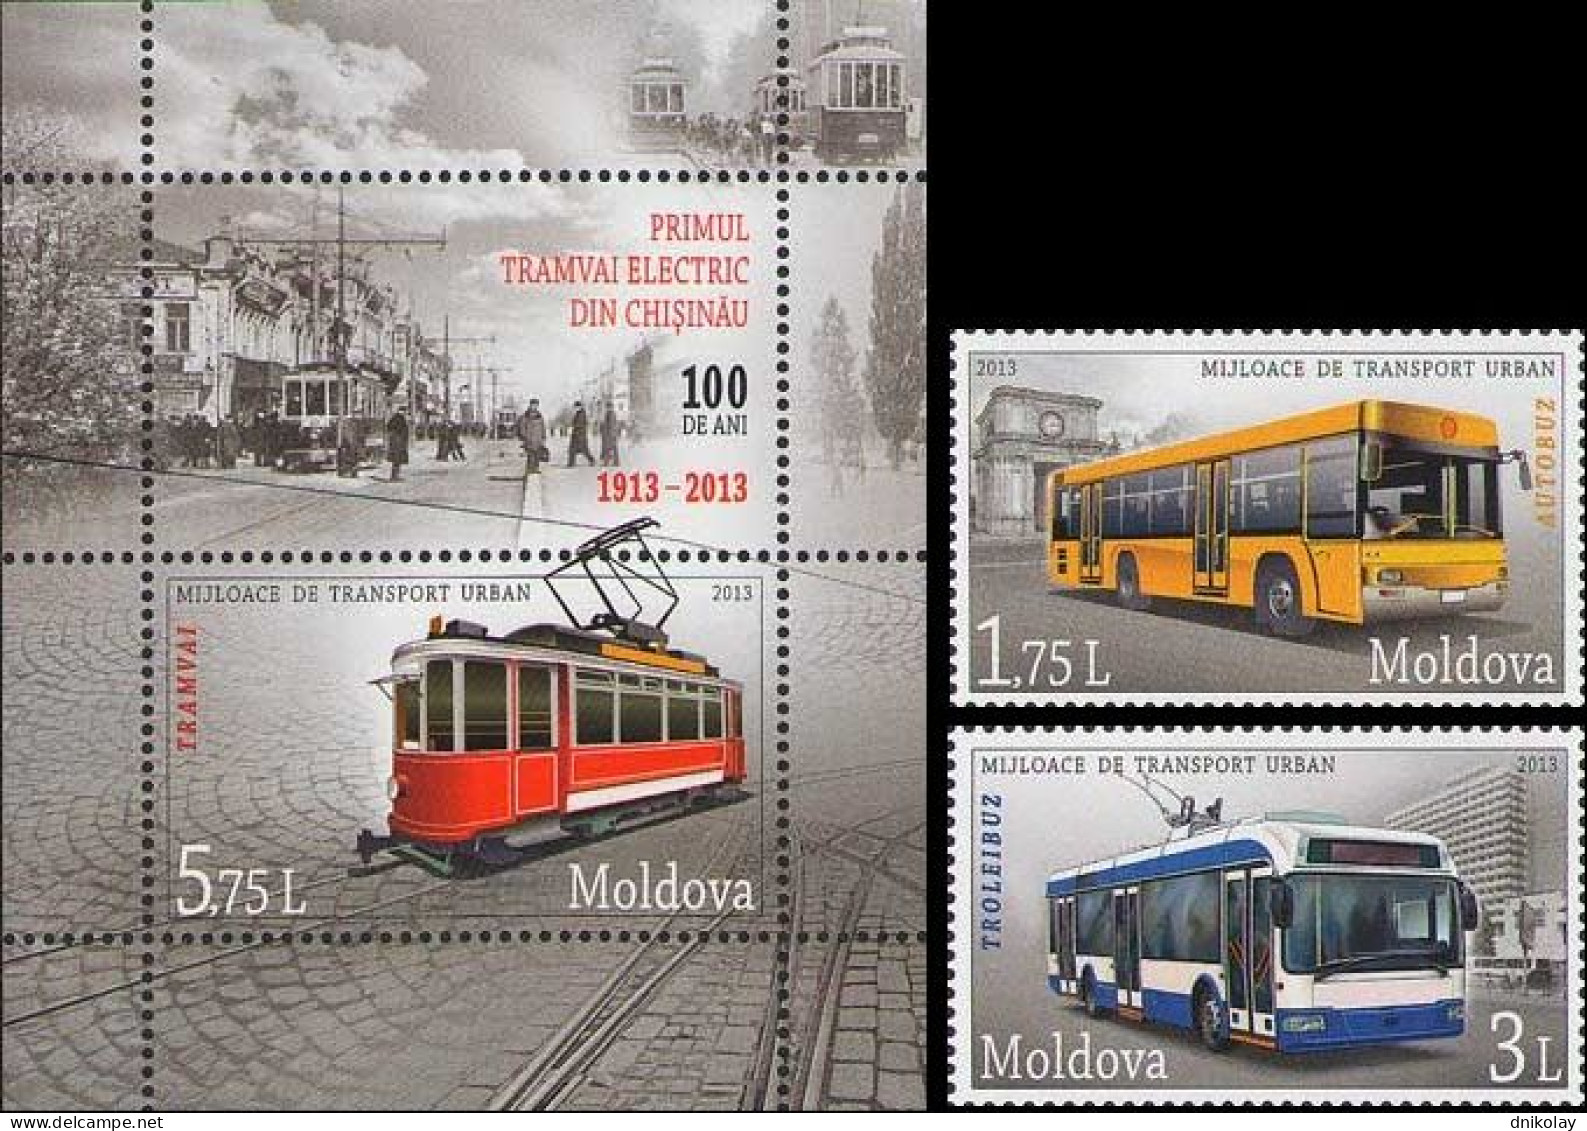 2013 856 Moldova Public Transportation MNH - Moldavia